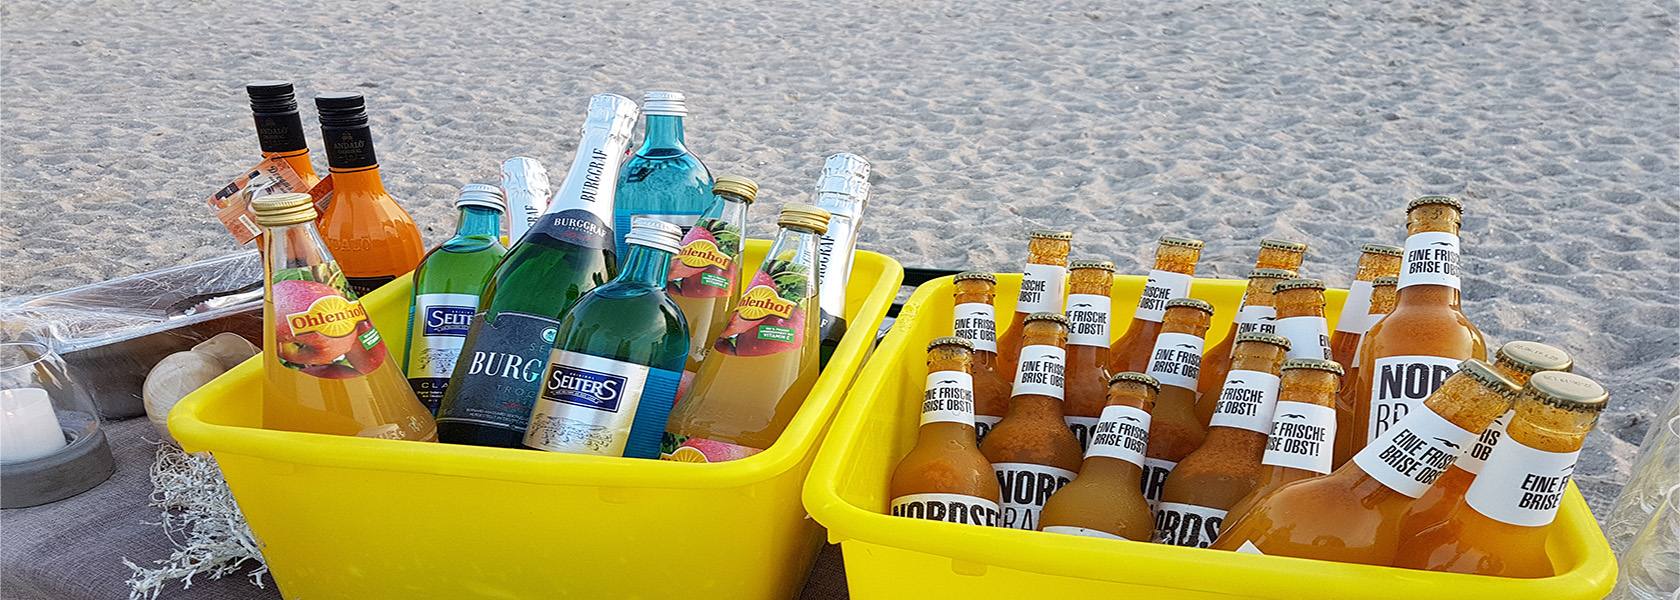 Getränke am Strand, © Die Nordsee GmbH, Carolin Wulke